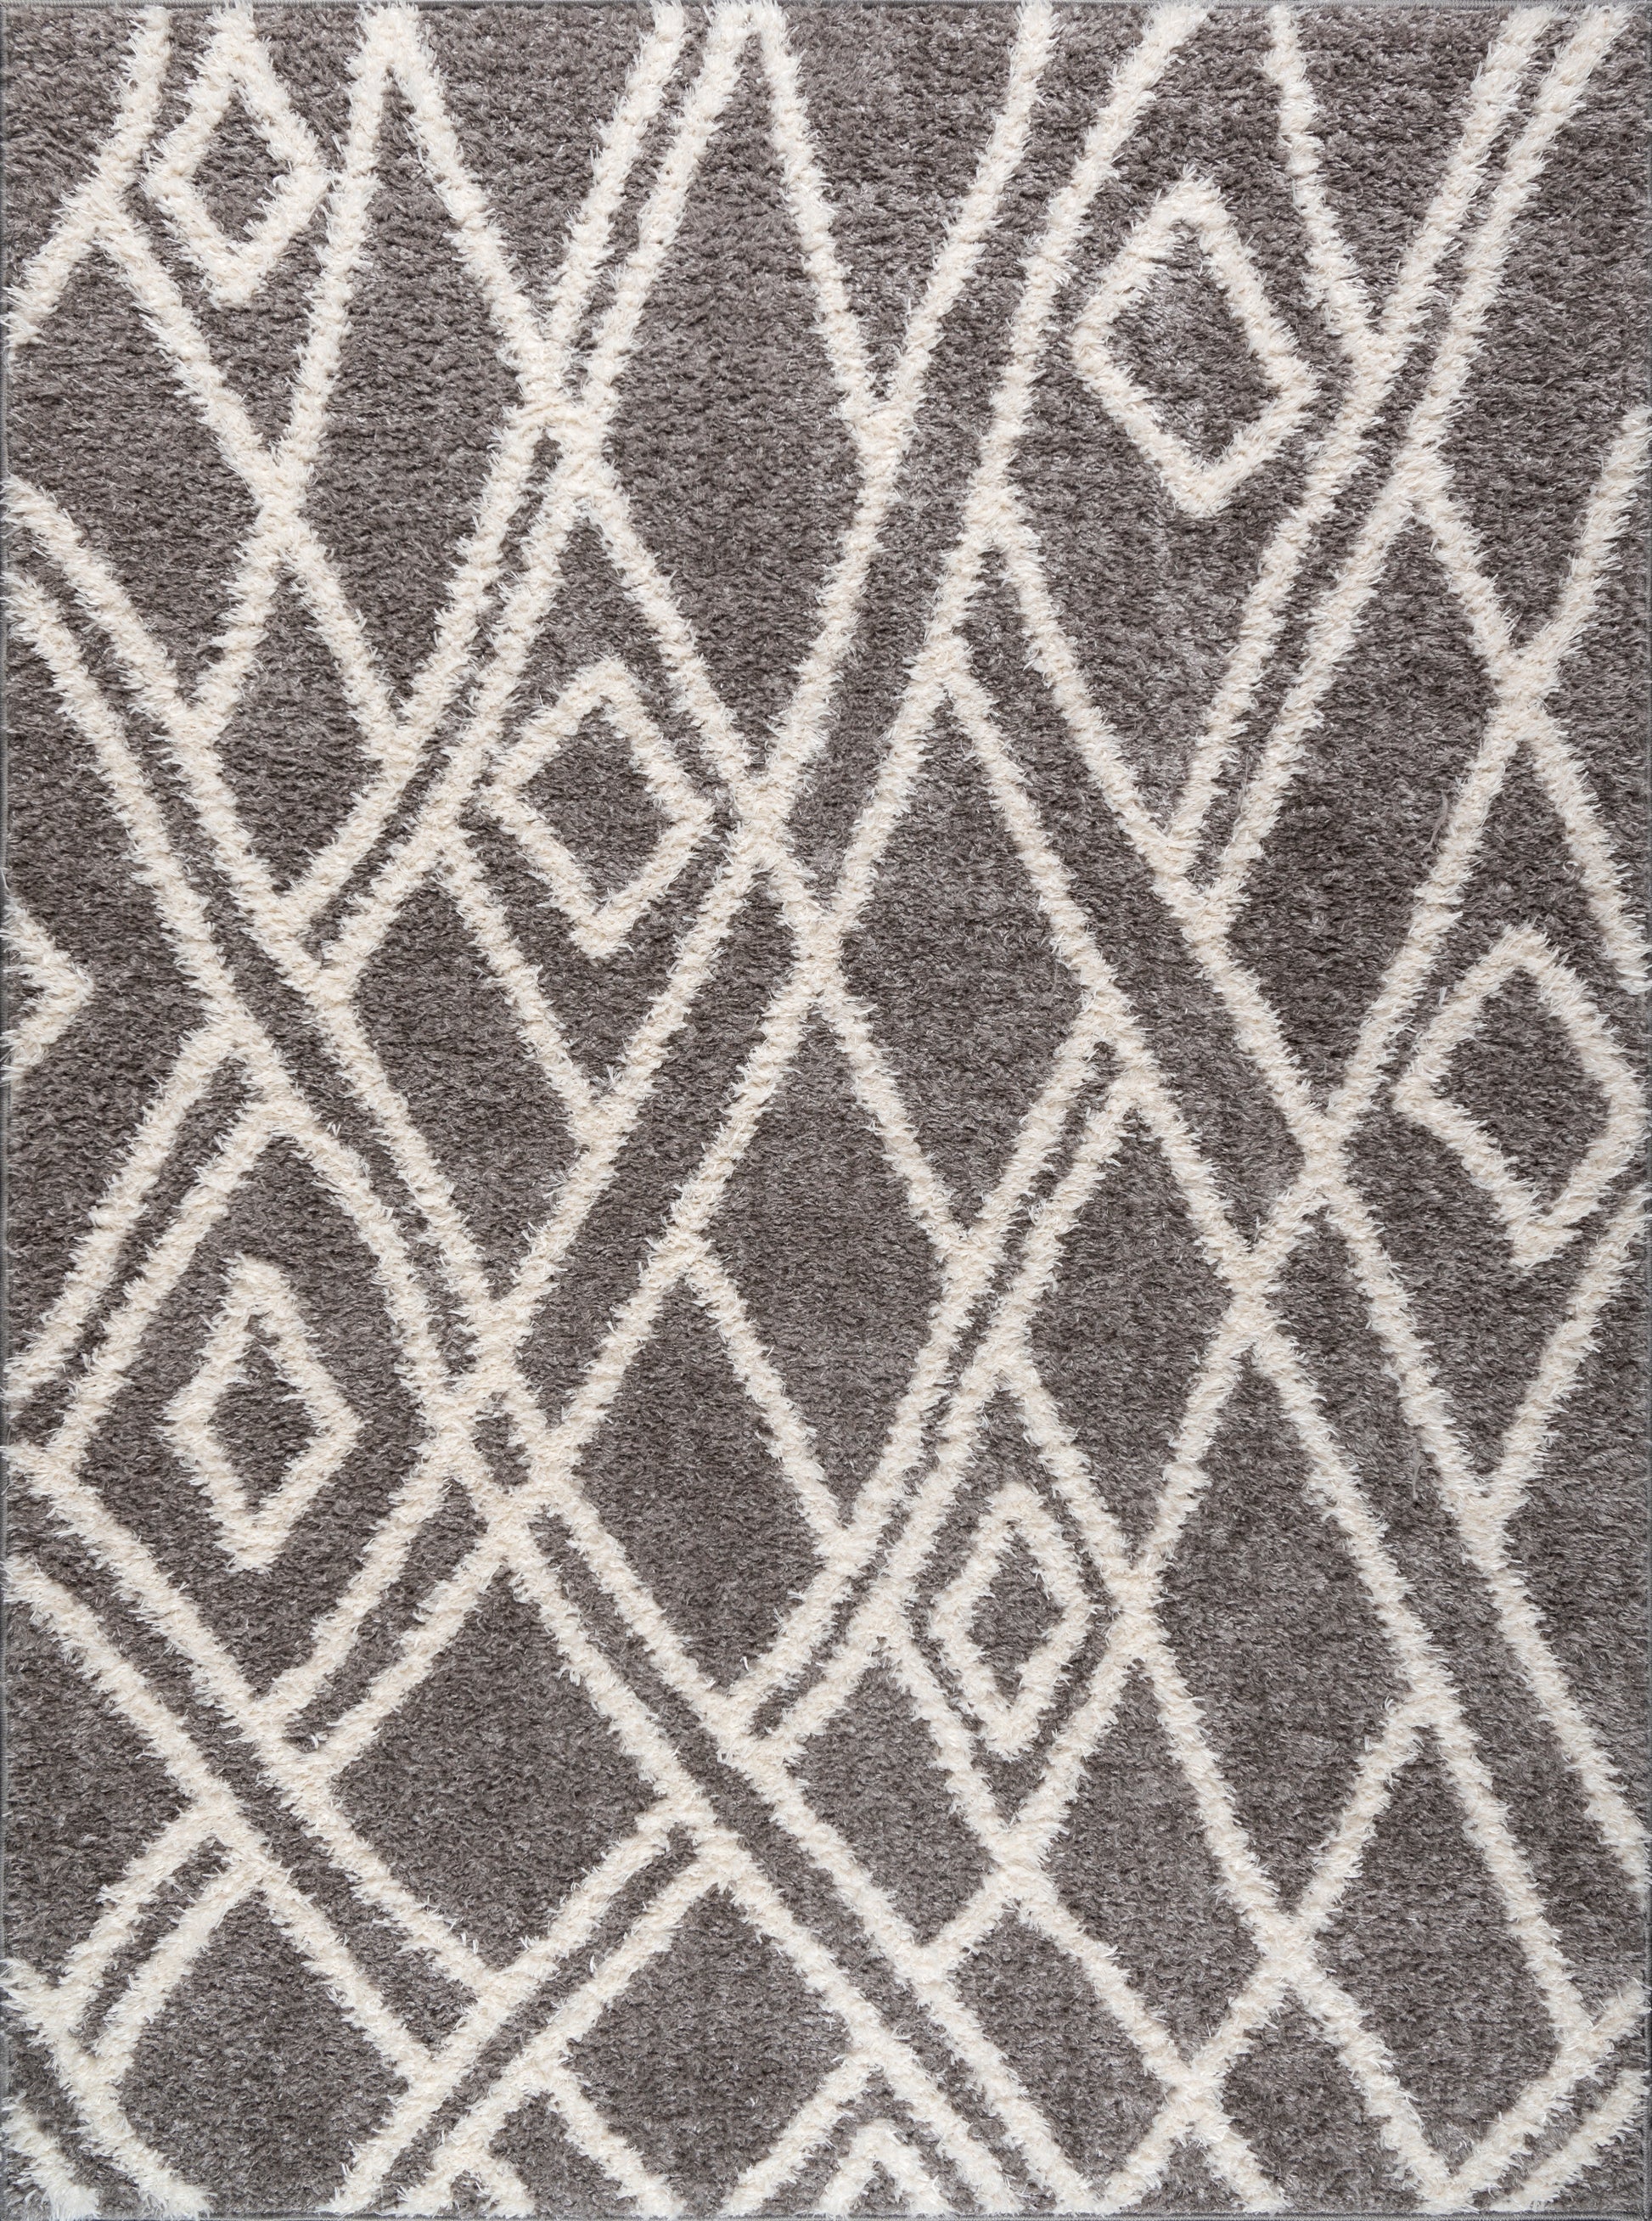 grey off white abstract fluffy shaggy area rug for living room bedroom 2x3 Doormat, Entrance, Balcony, Bathroom, Washroom